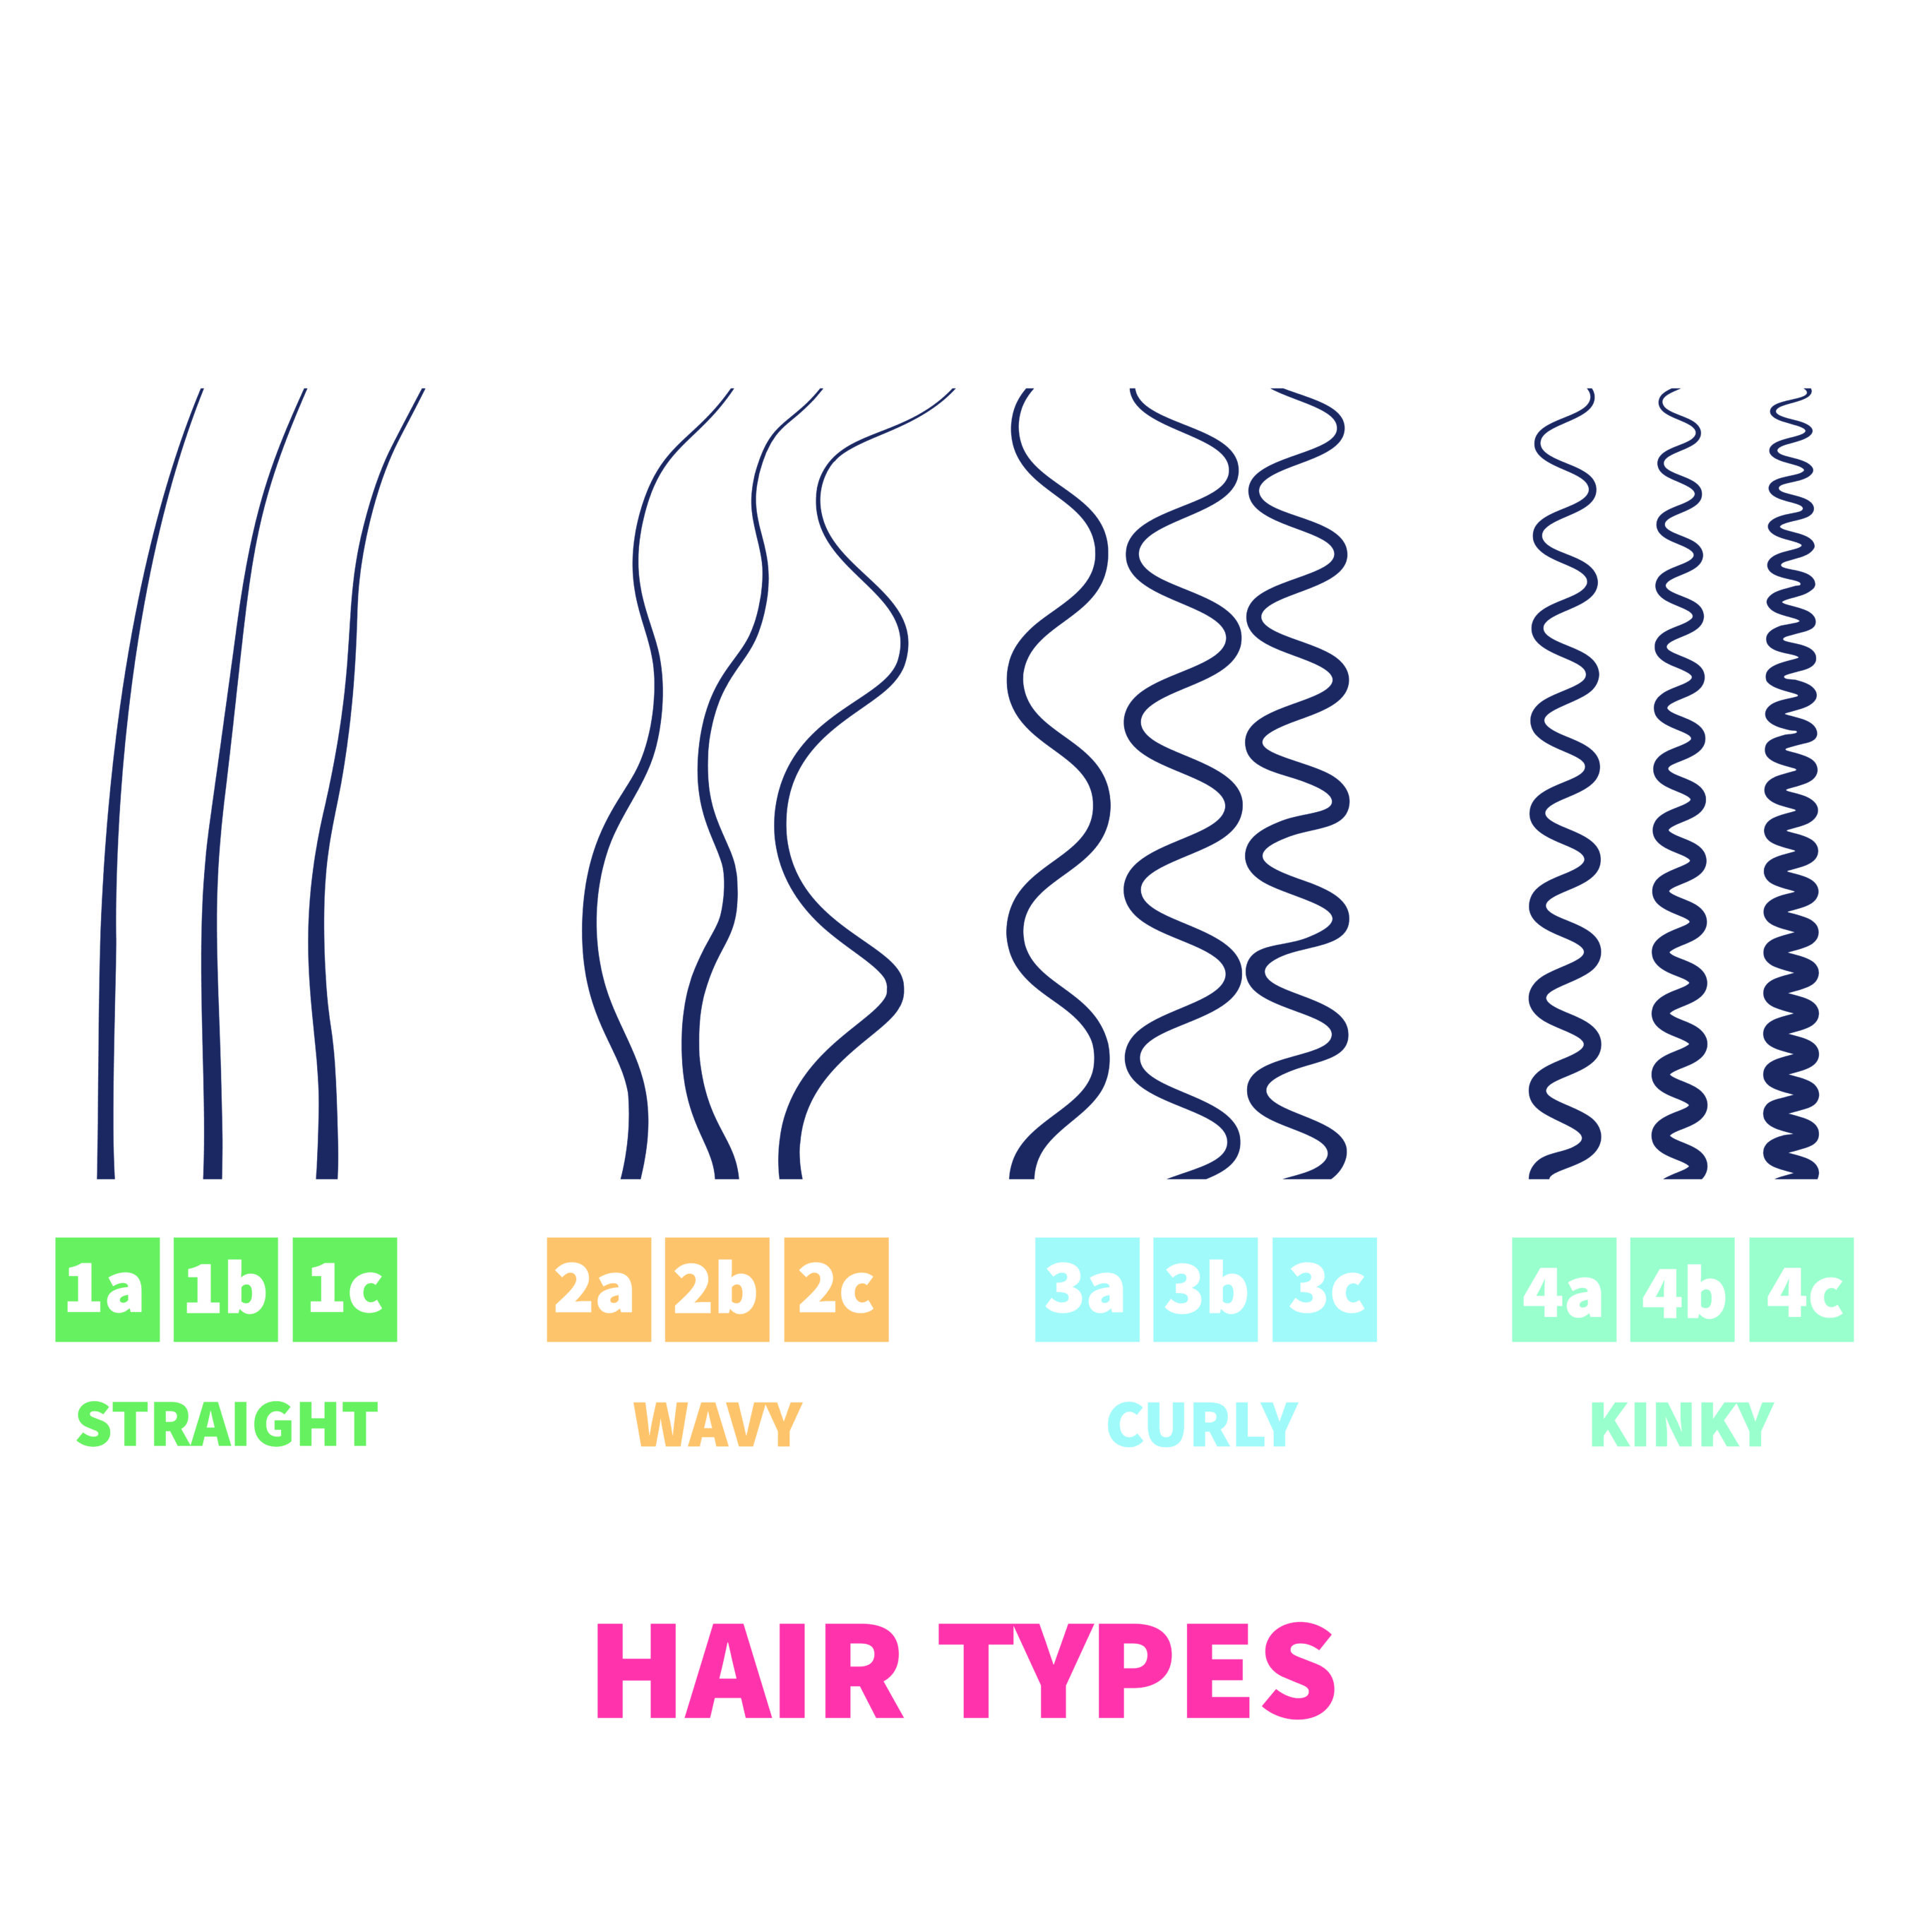 4 Hair Types From Straight Hair To Kinky Hair